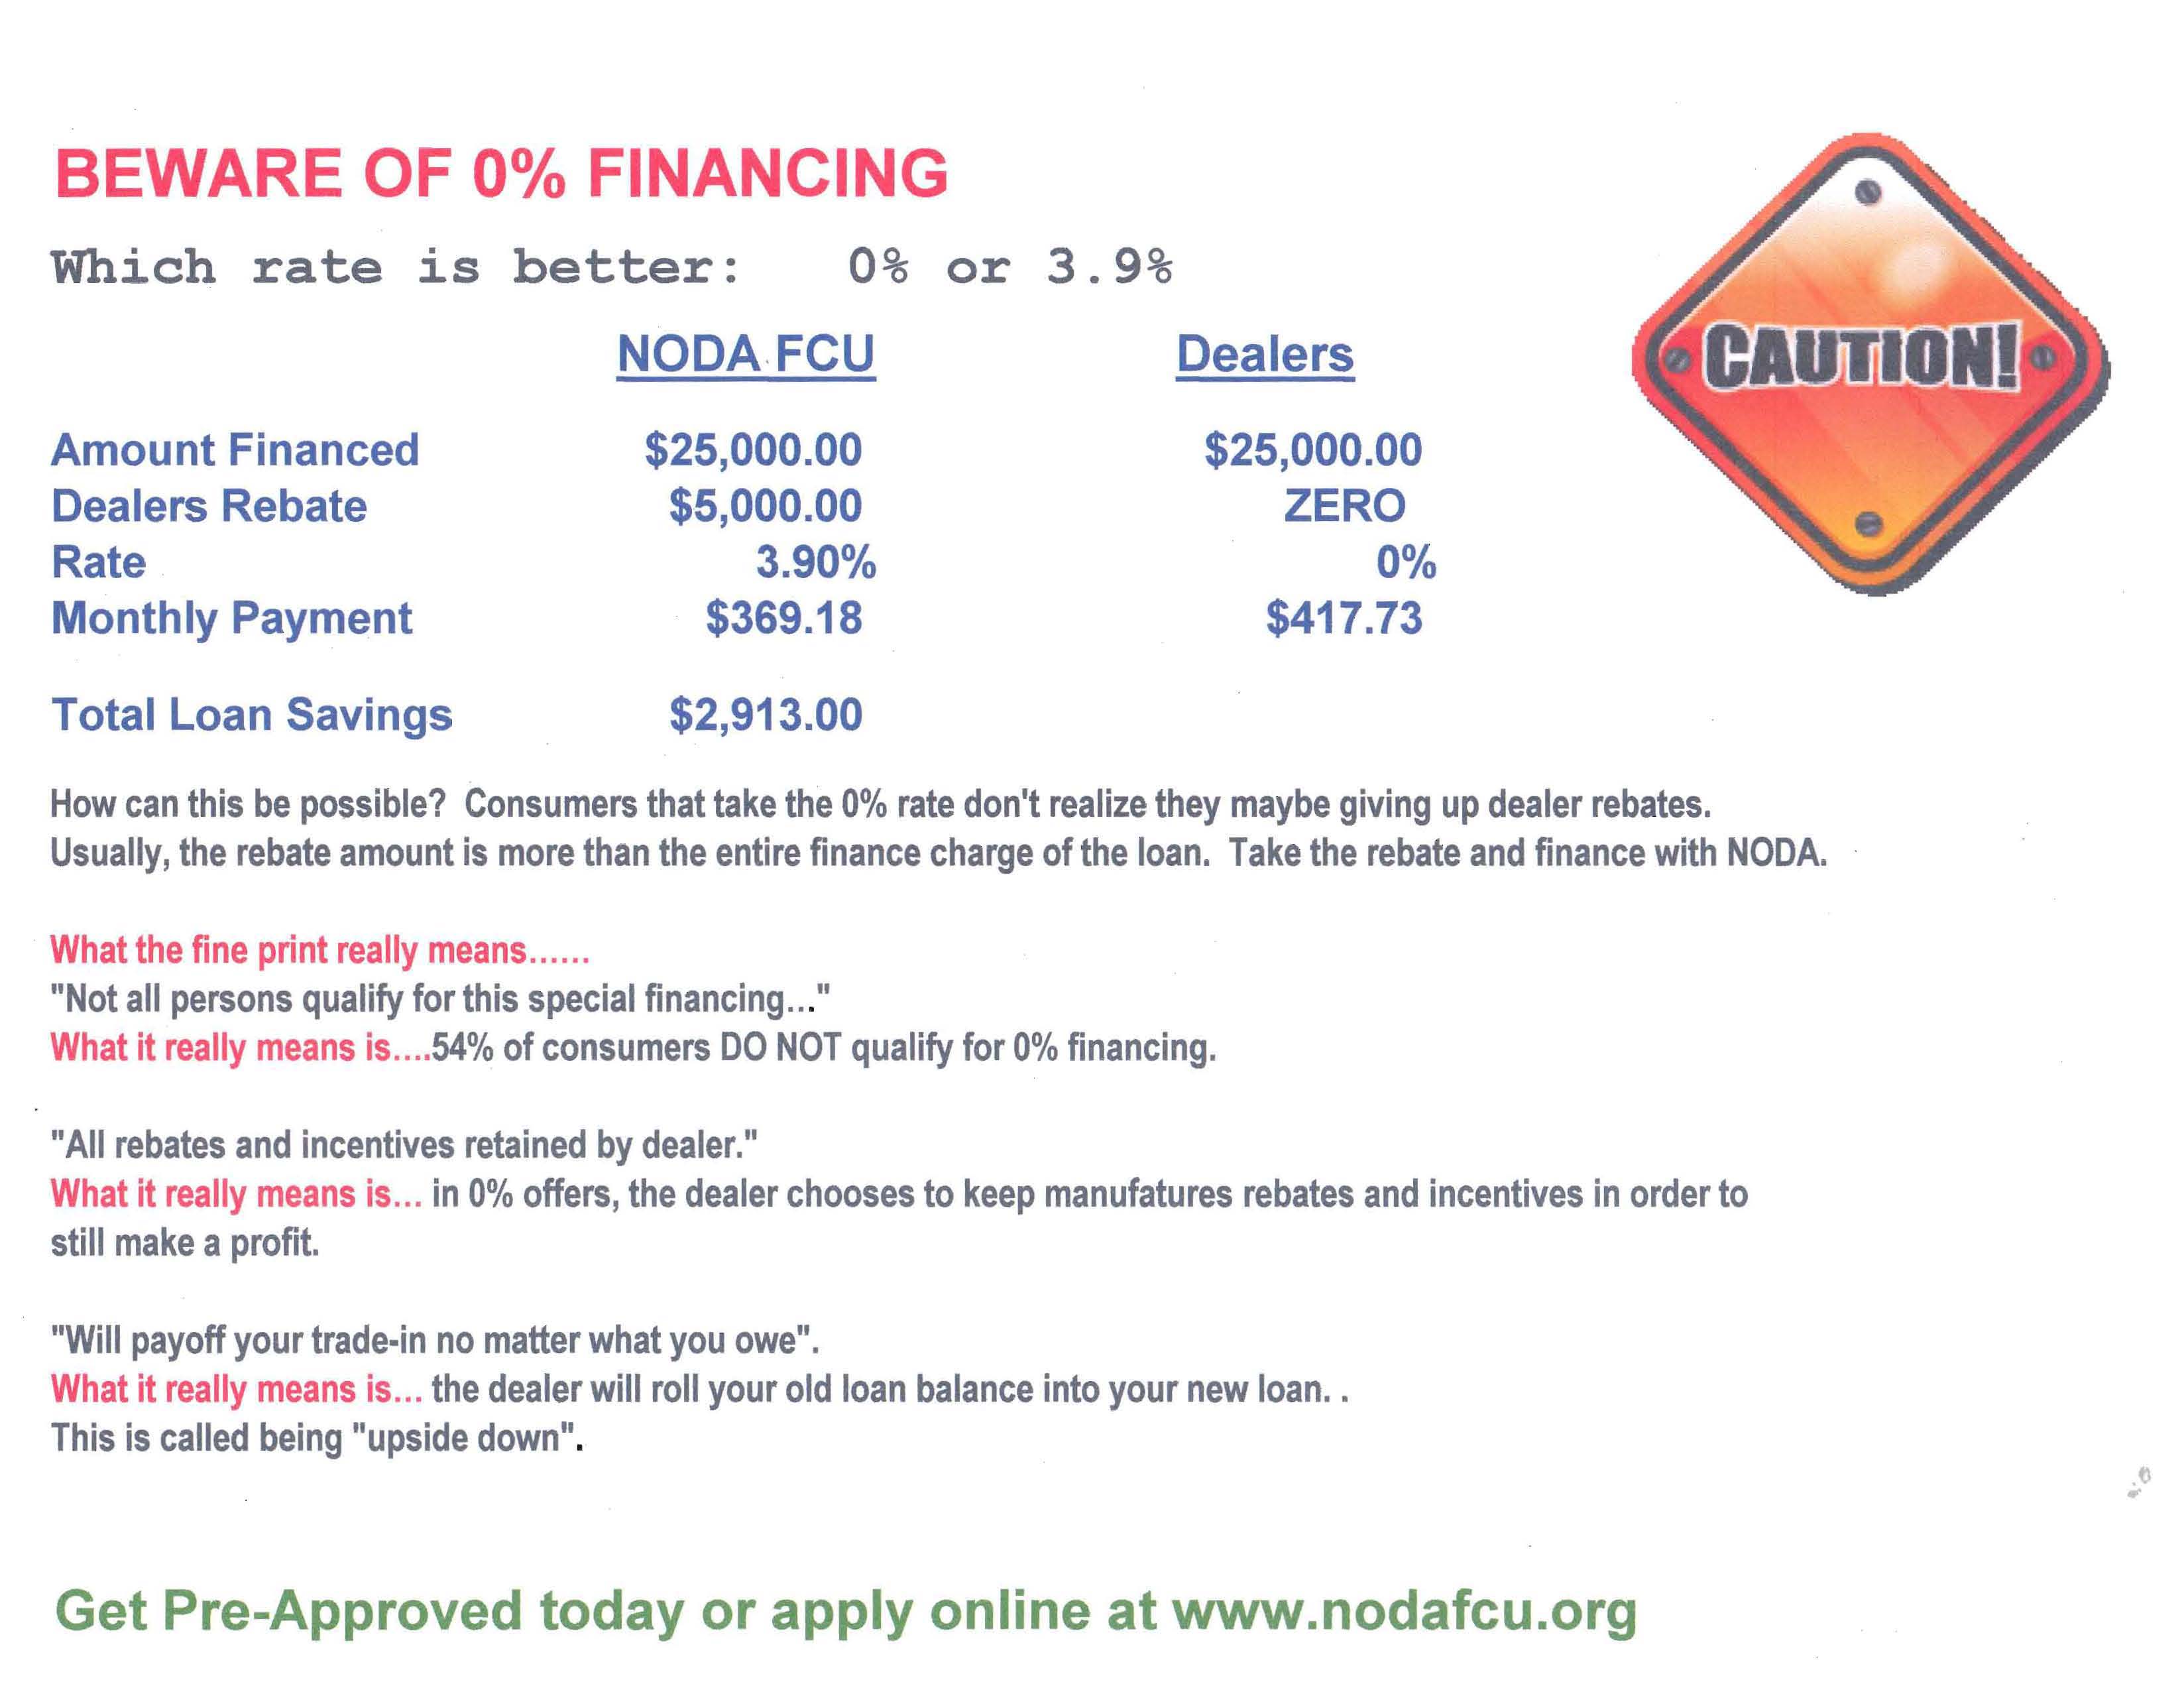 200-rebate-for-refinancing-peanut-butter-student-loan-assistance